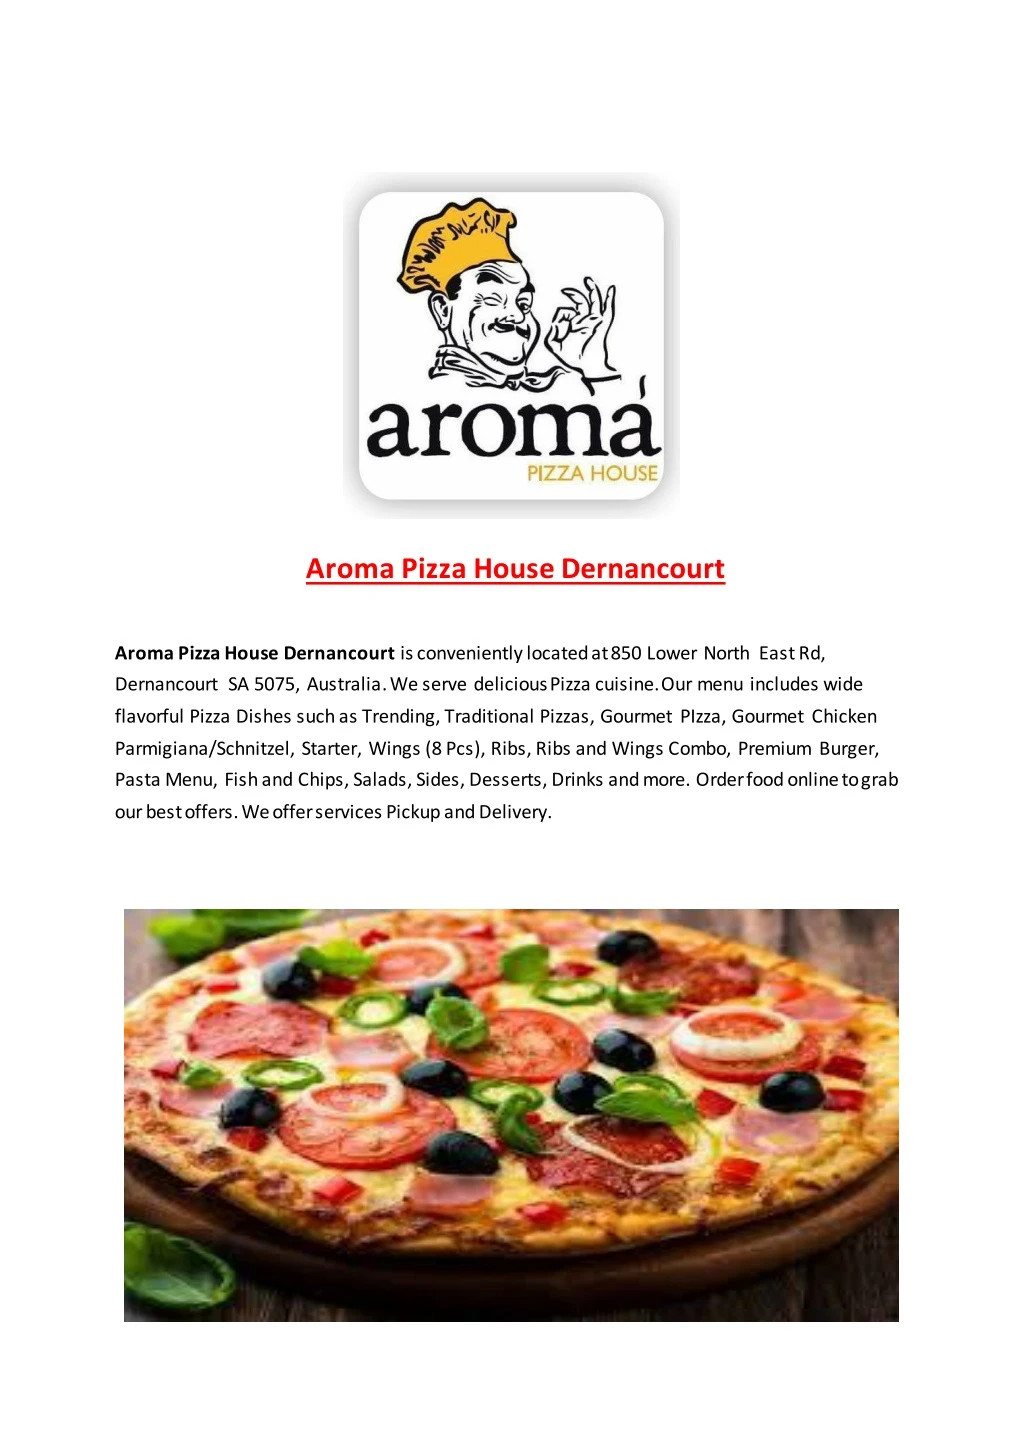 aroma pizza house dernancourt